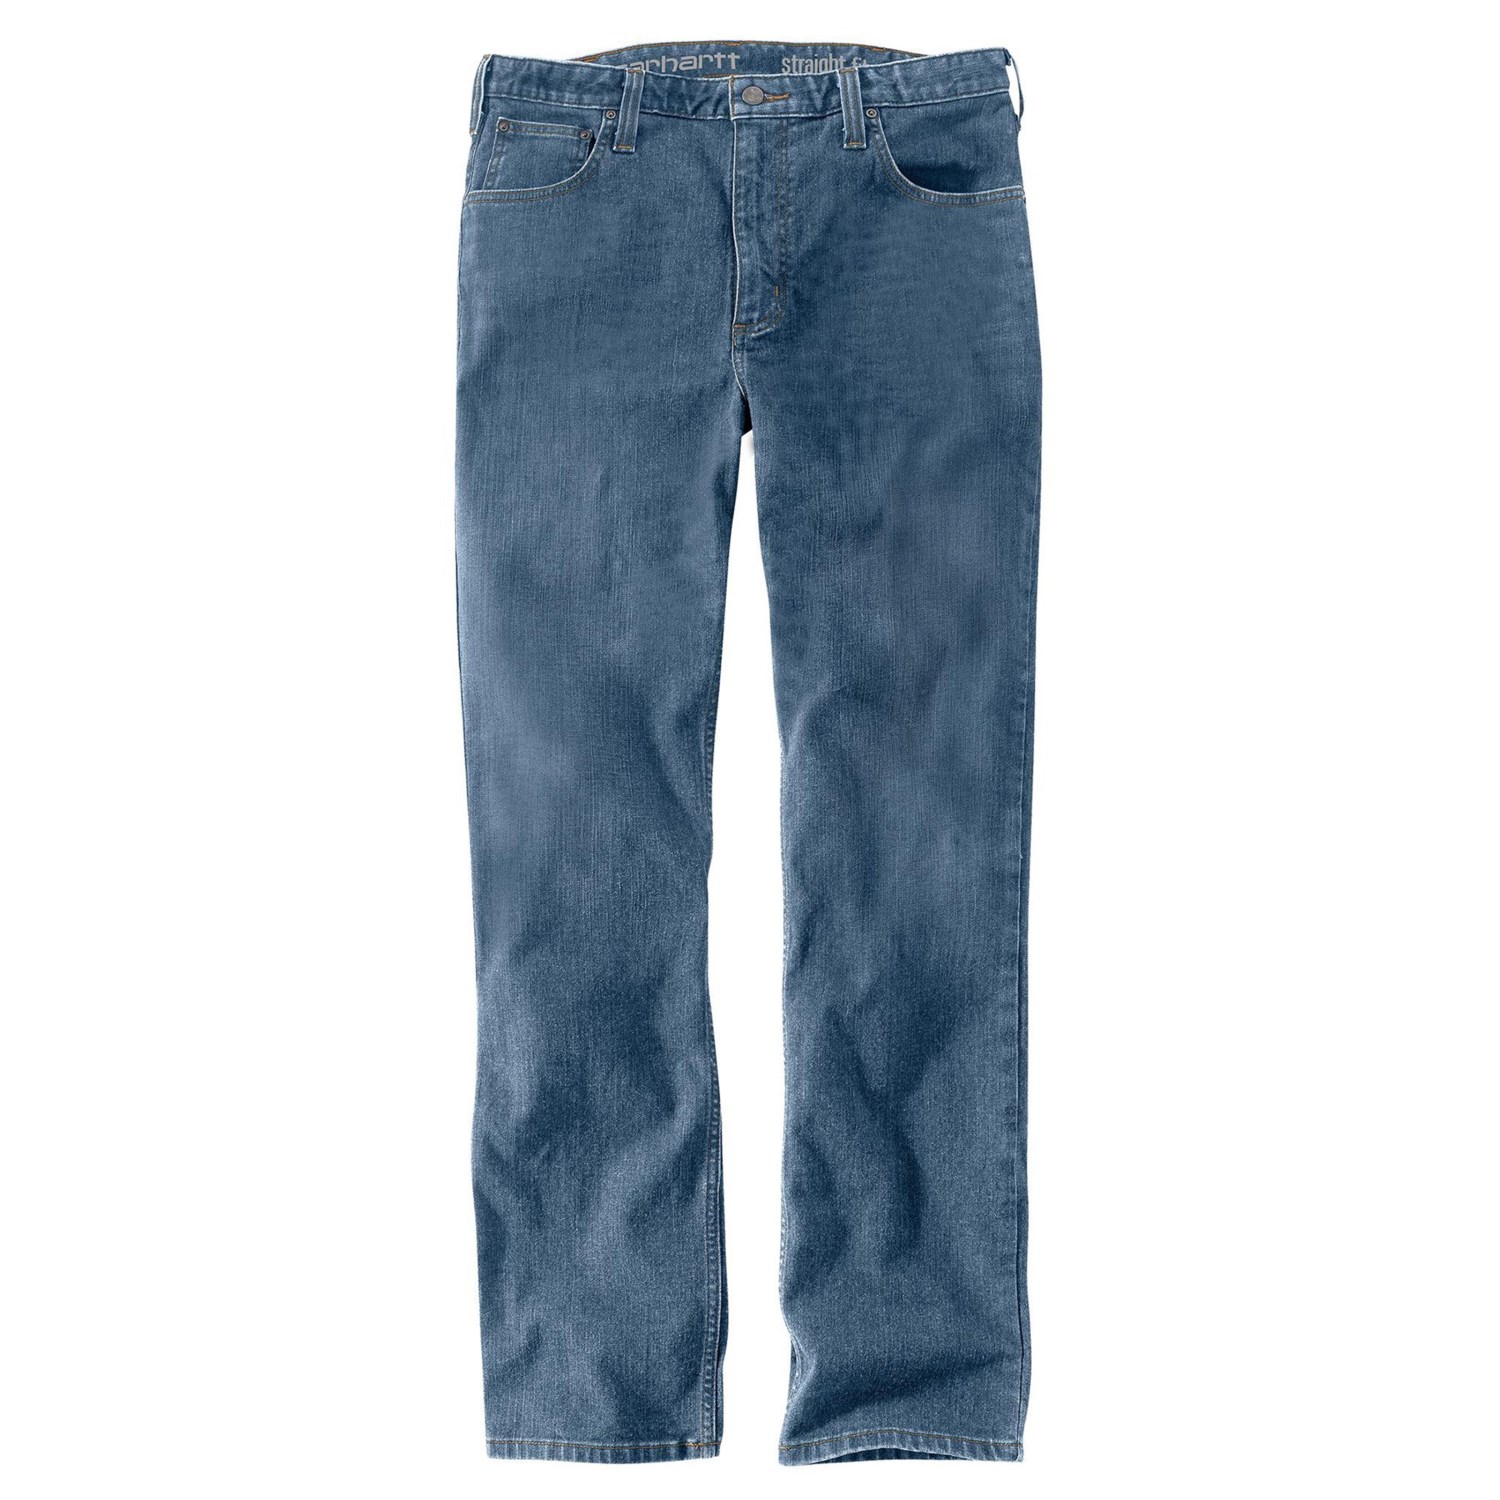 Carhartt 102807 Rugged Flex Tapered Leg Jeans - Factory Seconds